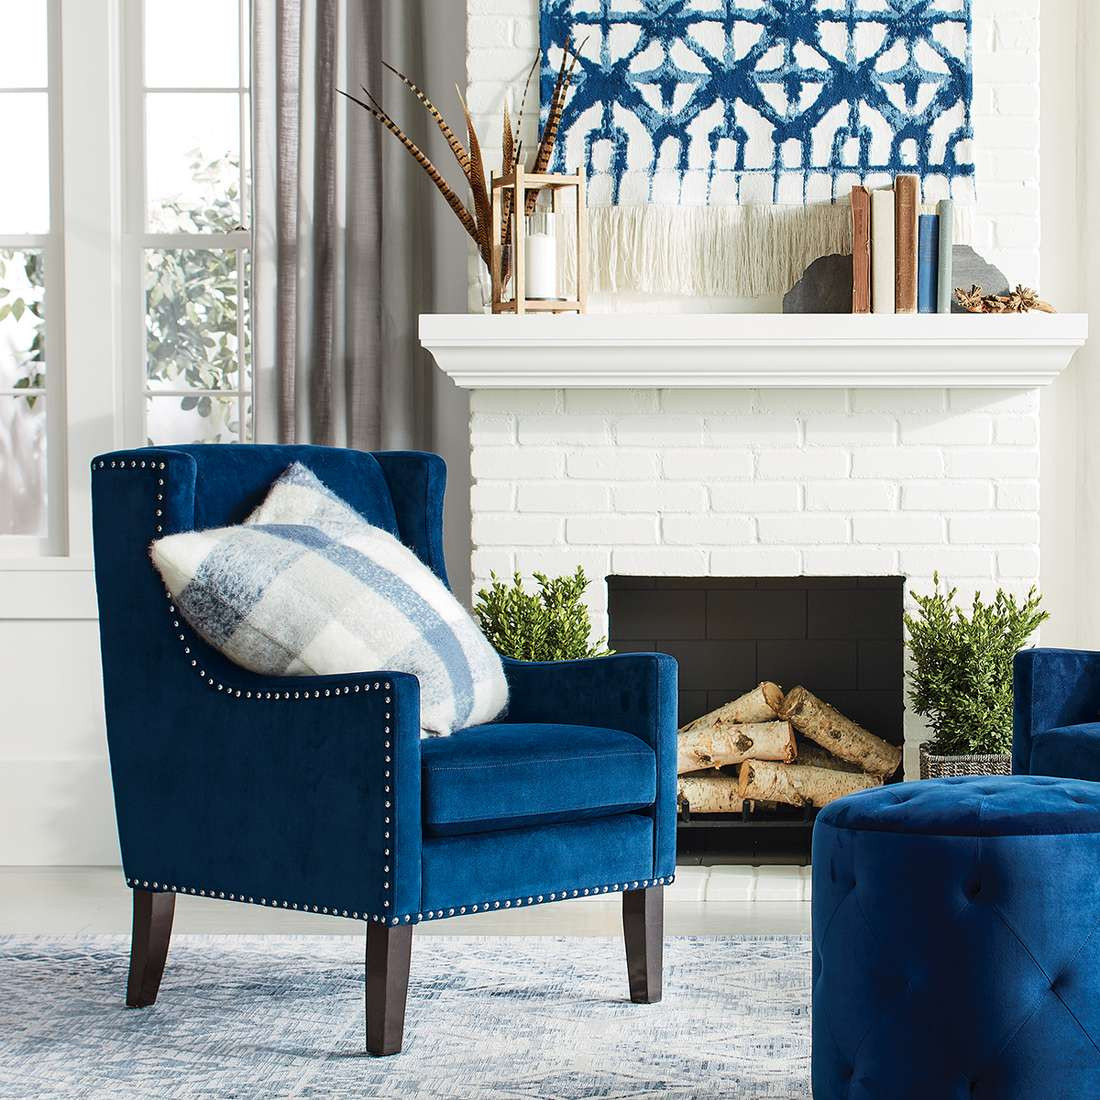 Target Living Room Curtains
 Home Ideas Design & Inspiration Tar